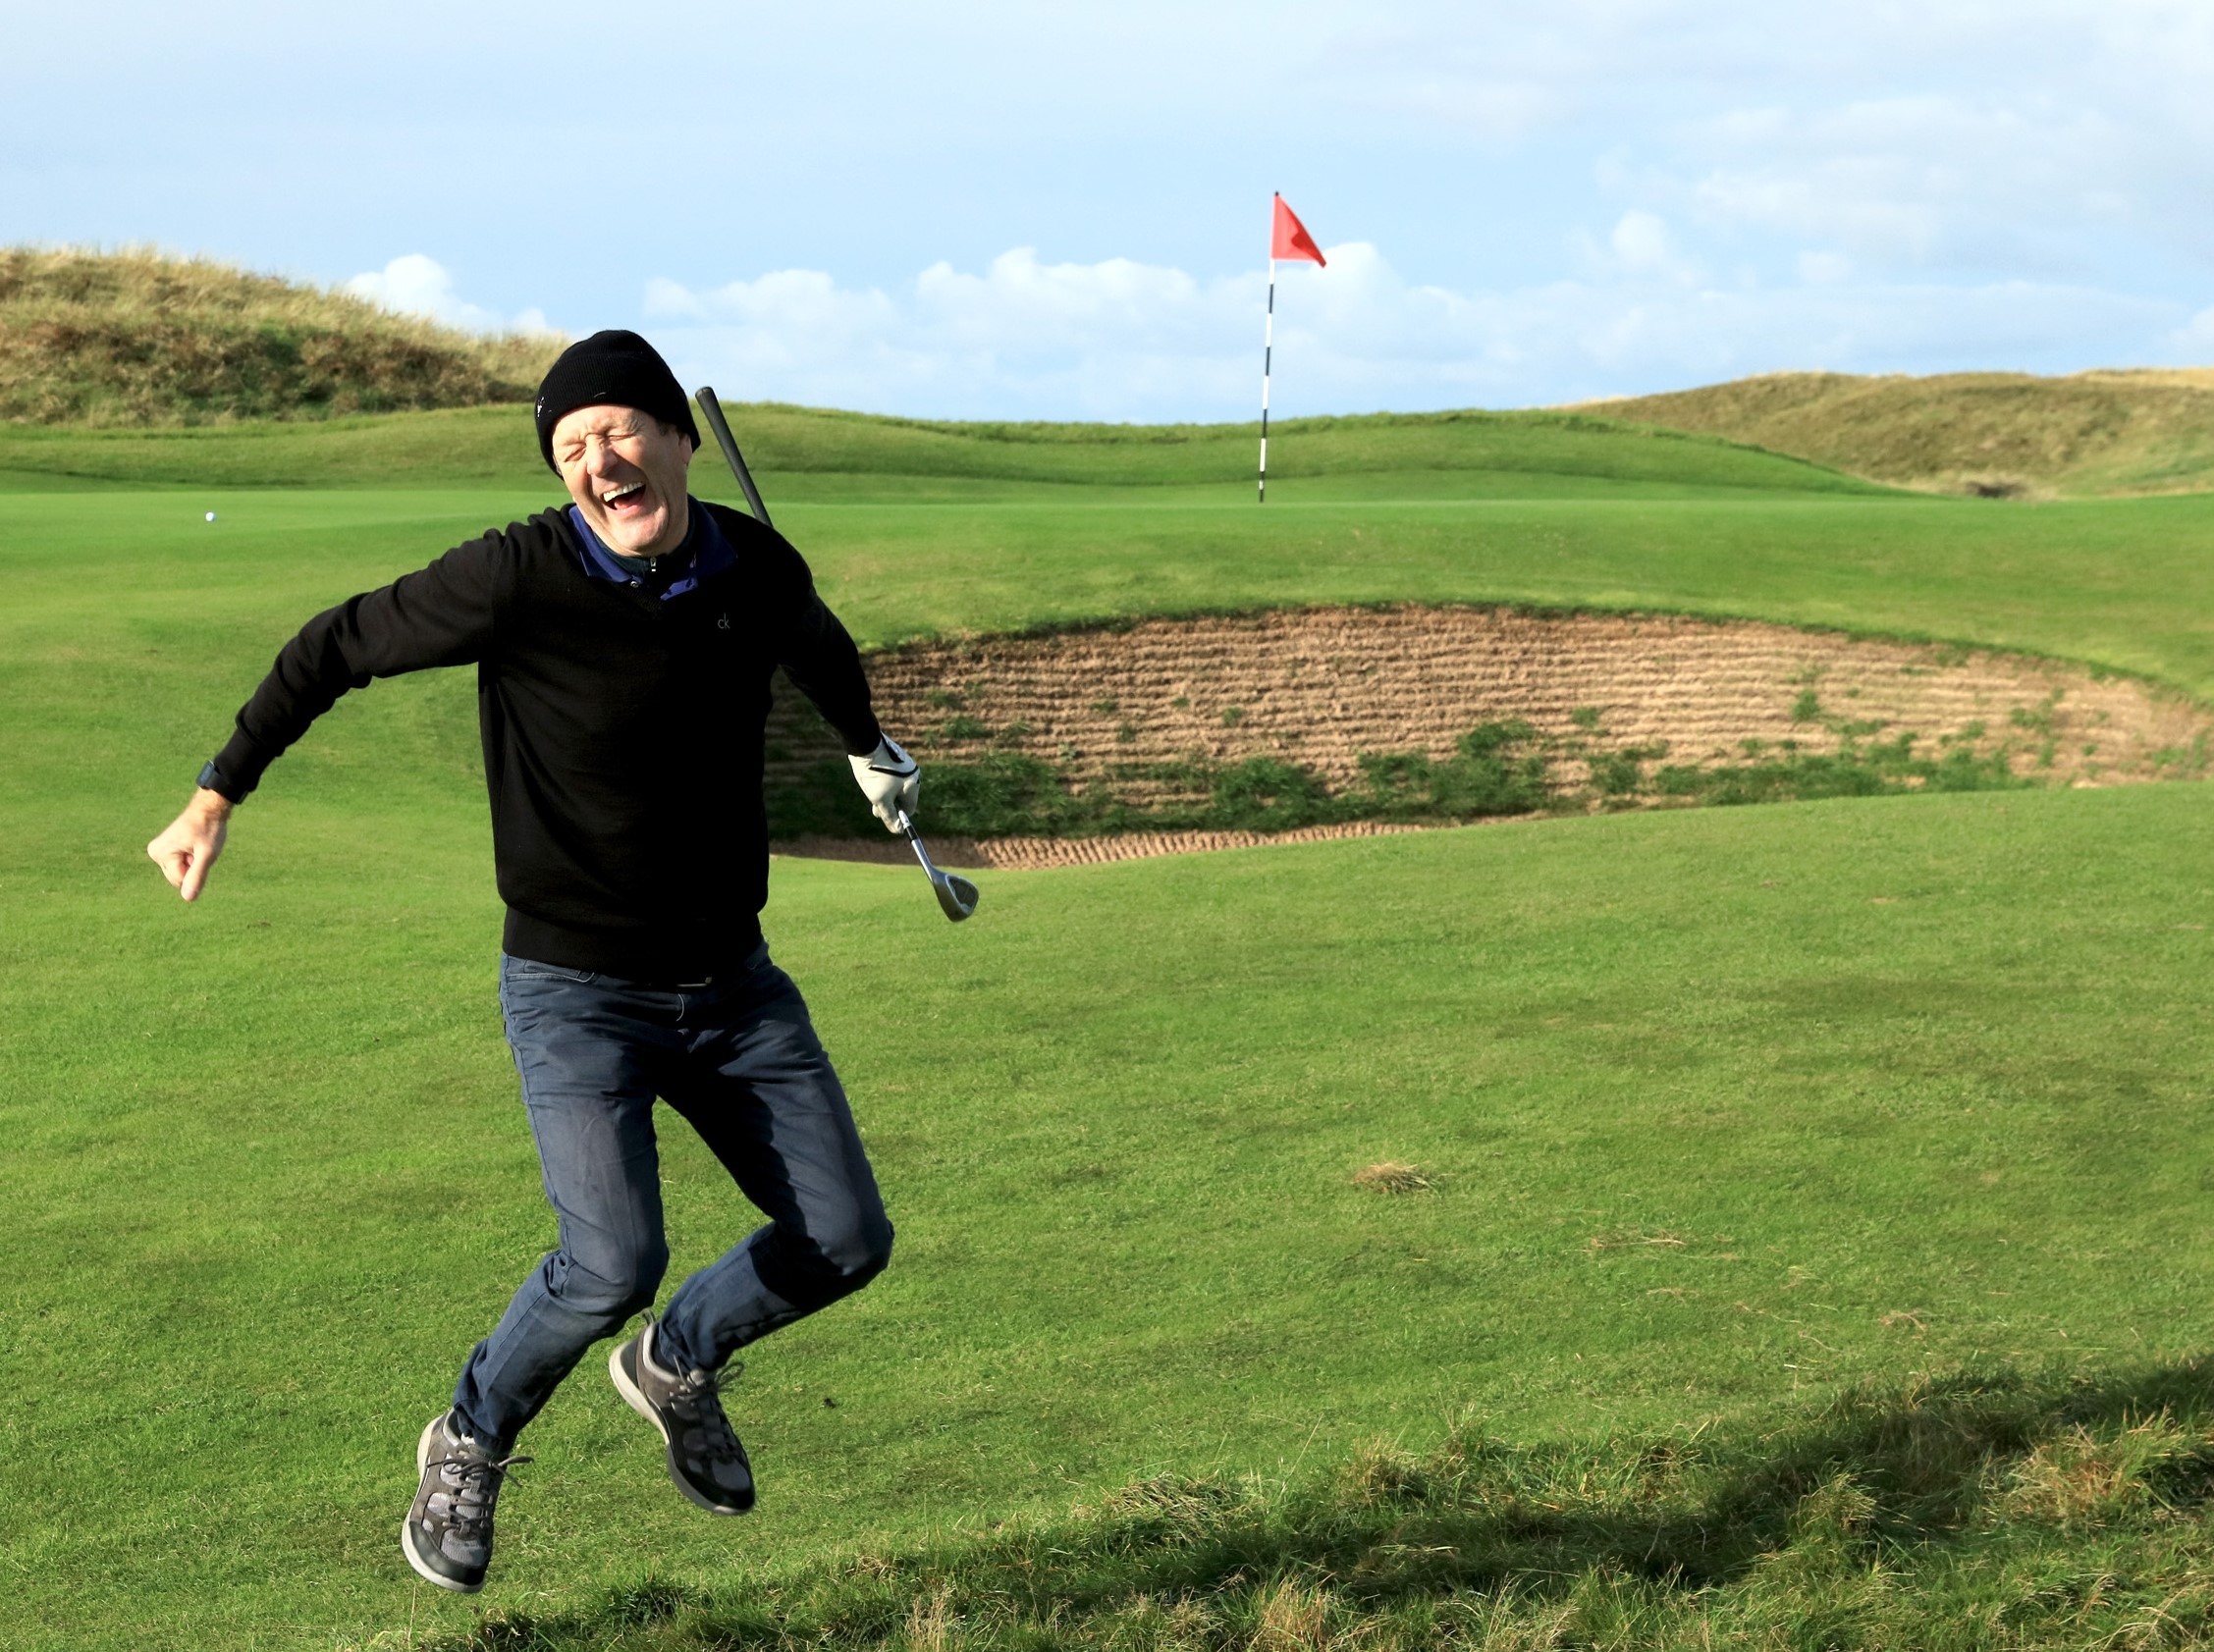 AGW Golf Captain, Peter Dixon breaks into a Highland Fling after his chip falls short into a bunker